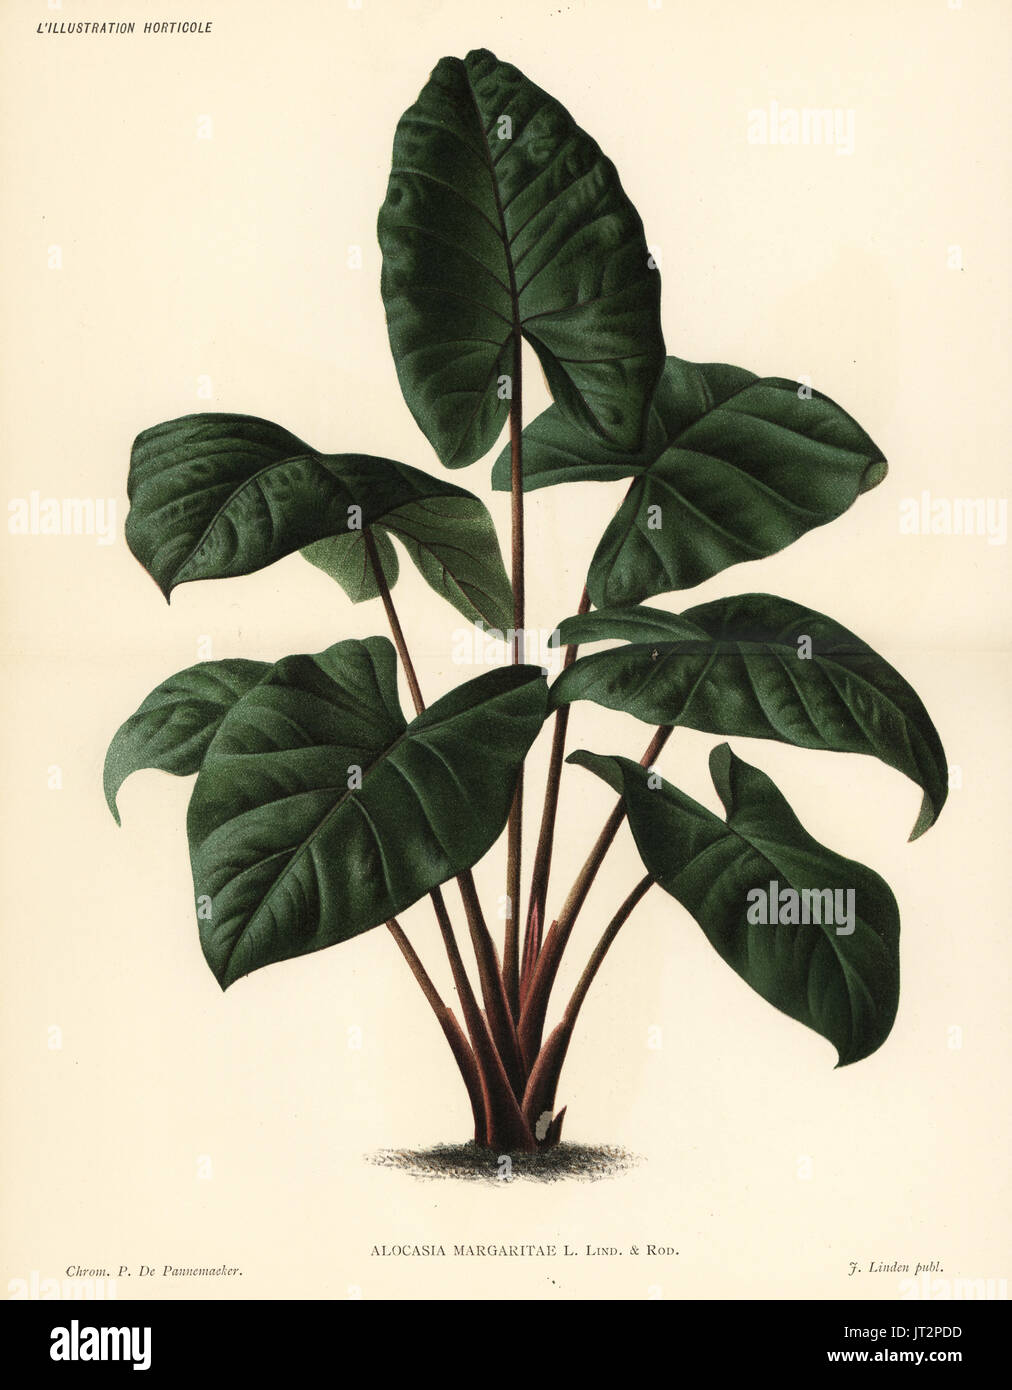 Alocasia puber foliage plant (Alocasia margaritae). Chromolithograph by Pieter de Pannemaeker from Jean Linden's l'Illustration Horticole, Brussels, 1885. Stock Photo